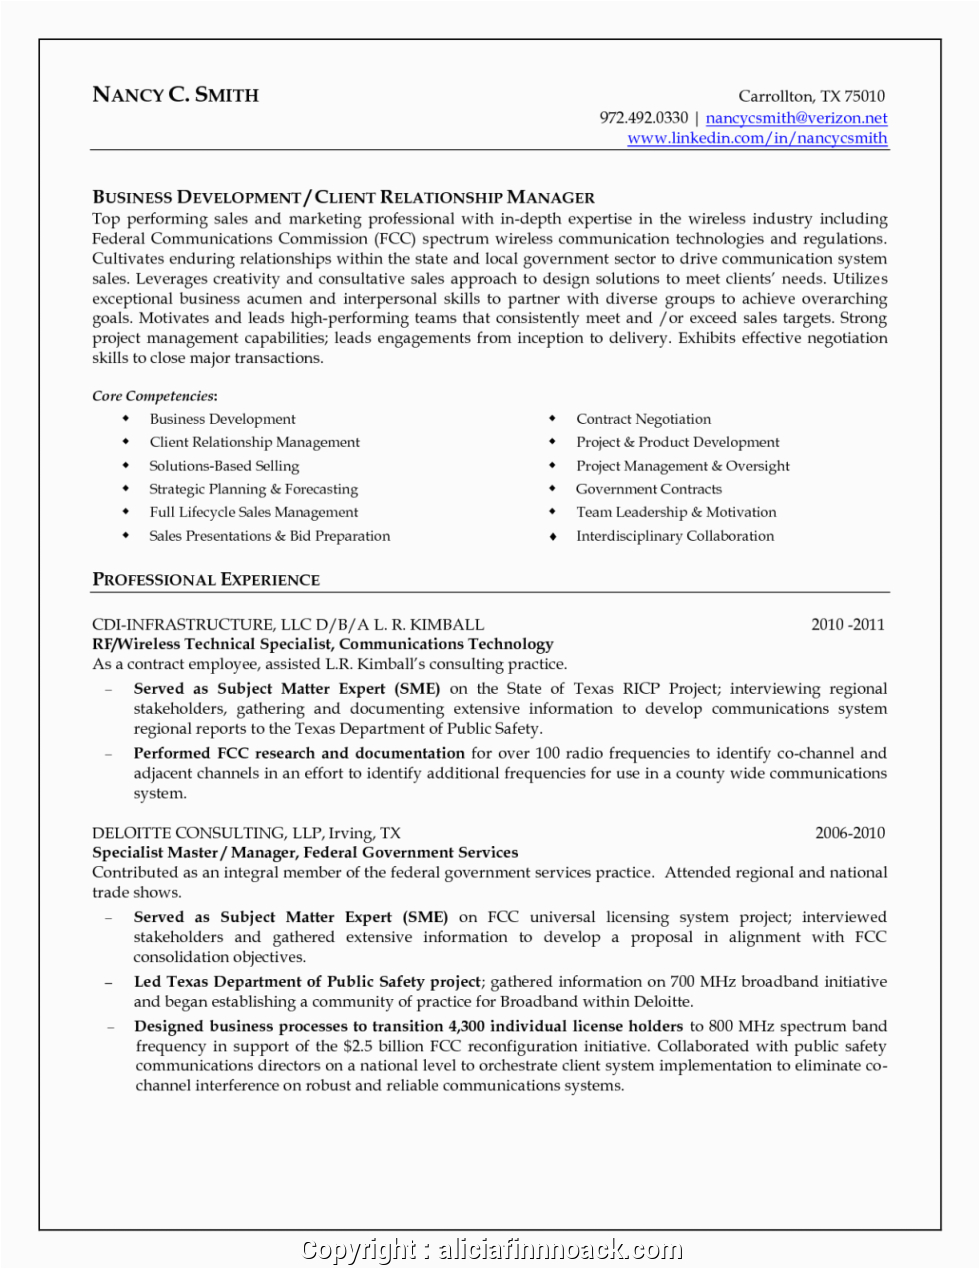 Sample Resume for Verizon Wireless Sales Rep Print Verizon Wireless Store Manager Resume Sales Mid